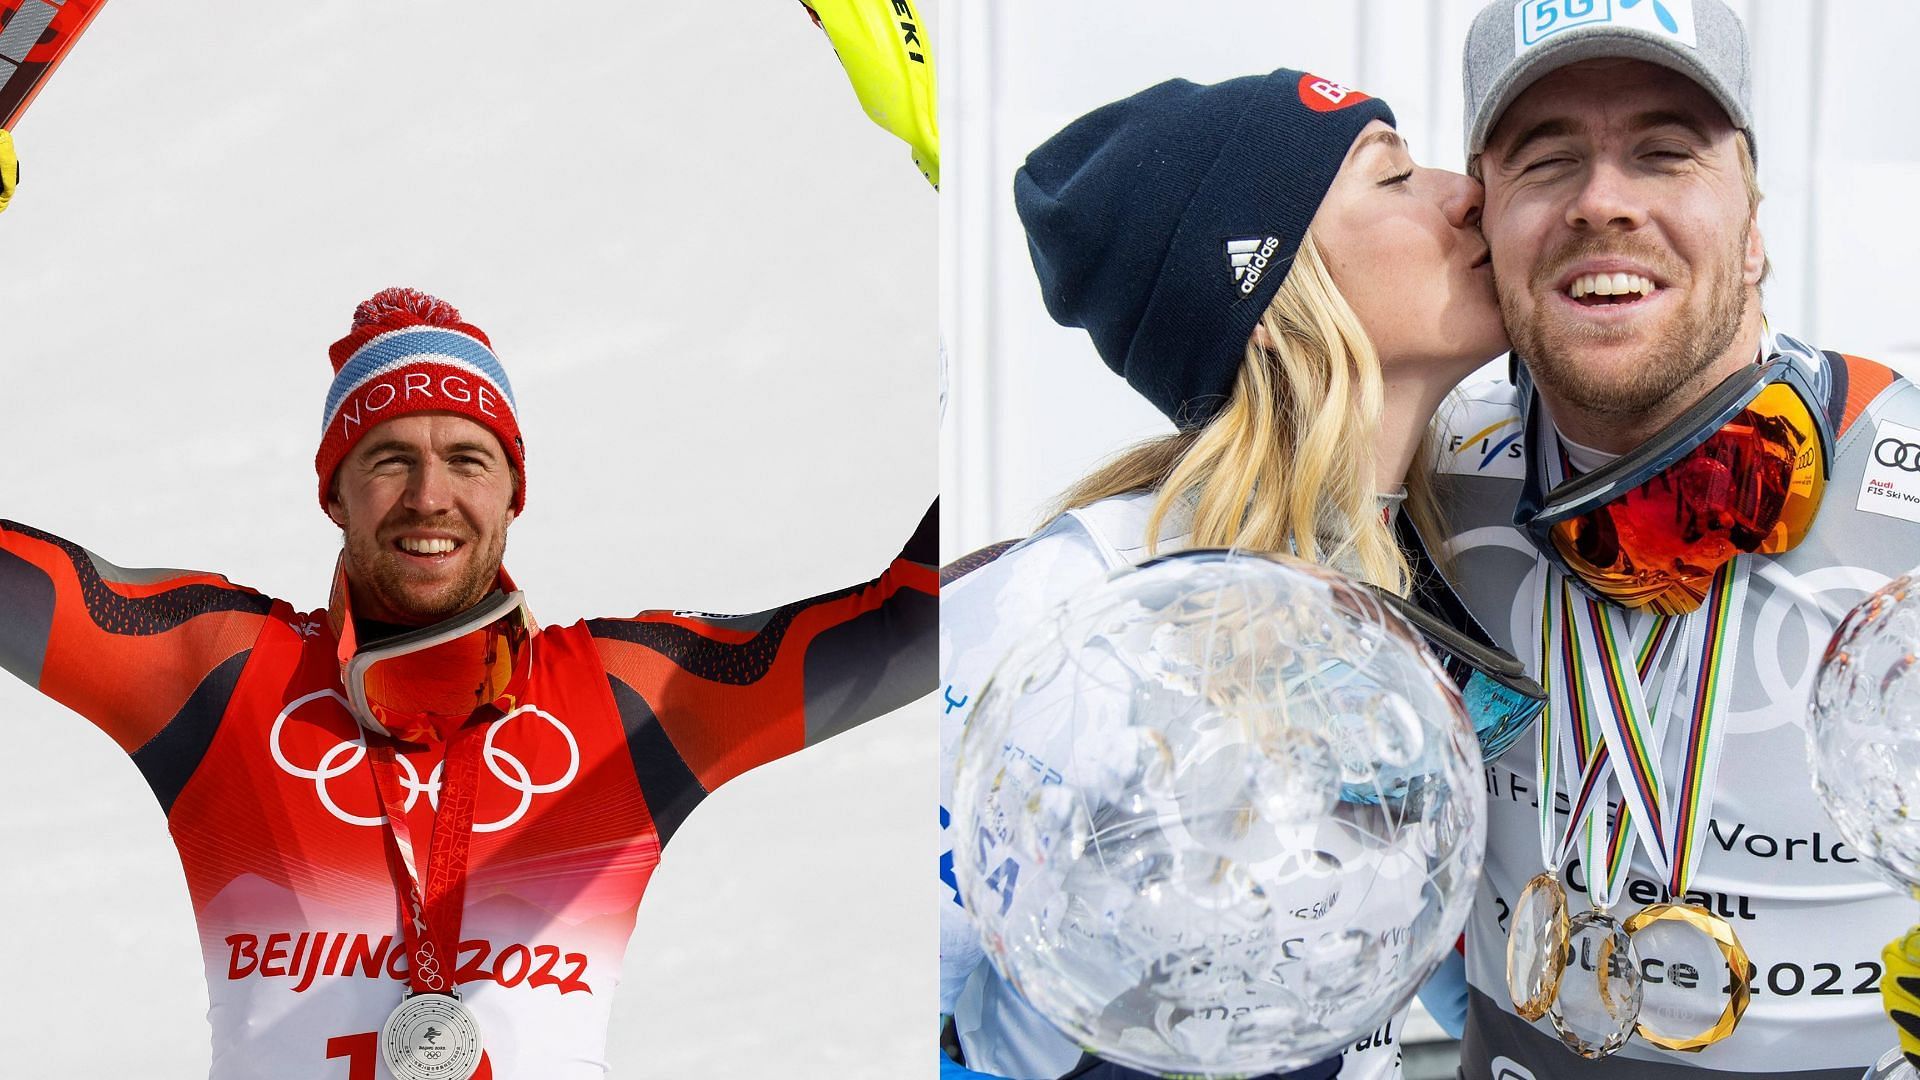 Mikaela Shiffrin and Aleksander Kilde (Image via Sportskeeda)